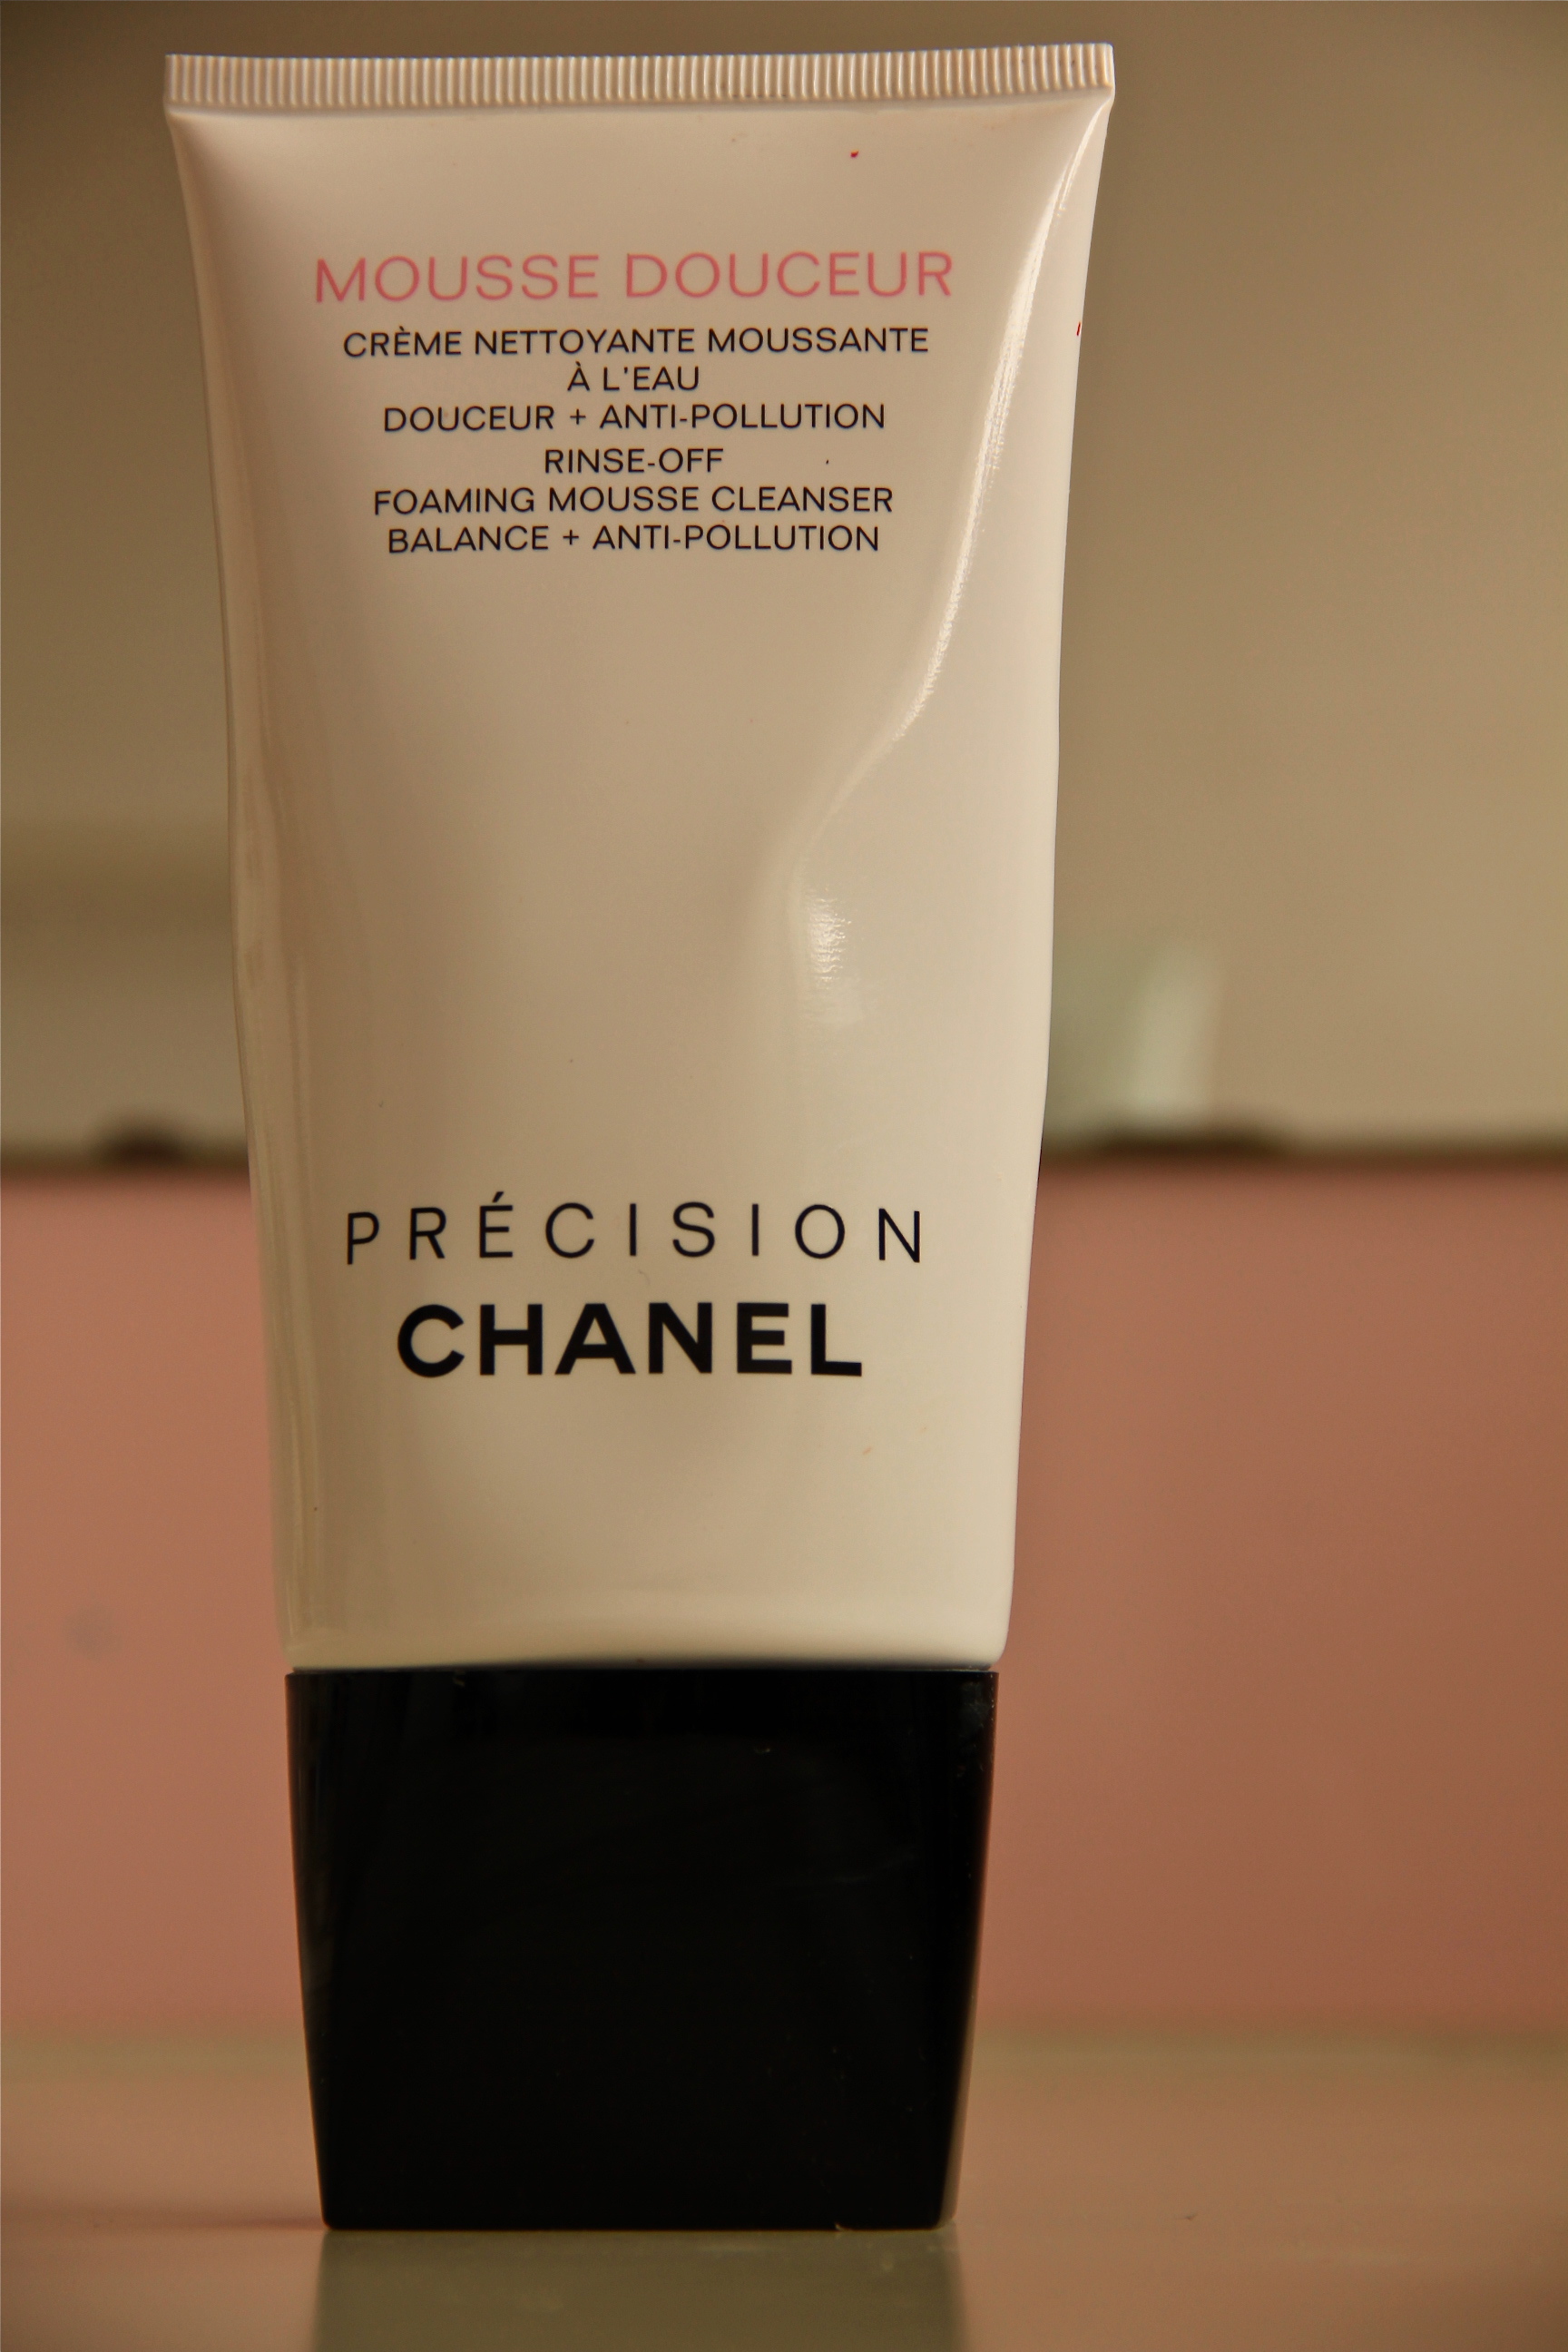 Review- Skincare: Chanel Mousse Douceur